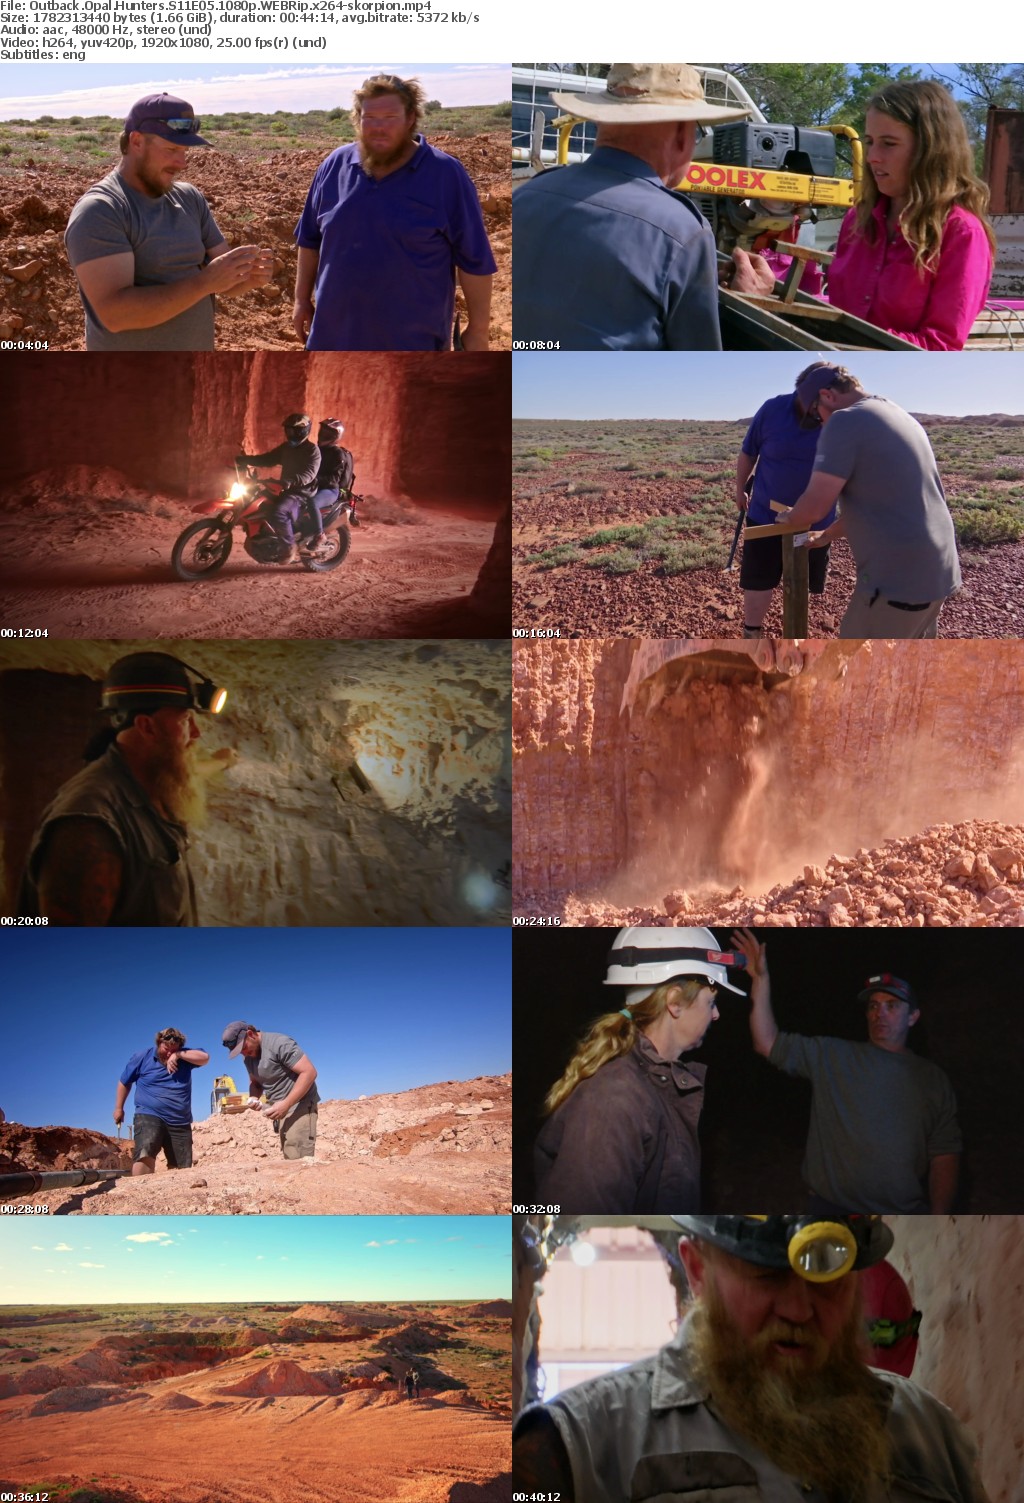 Outback Opal Hunters S11E05 1080p WEBRip x264-skorpion mp4